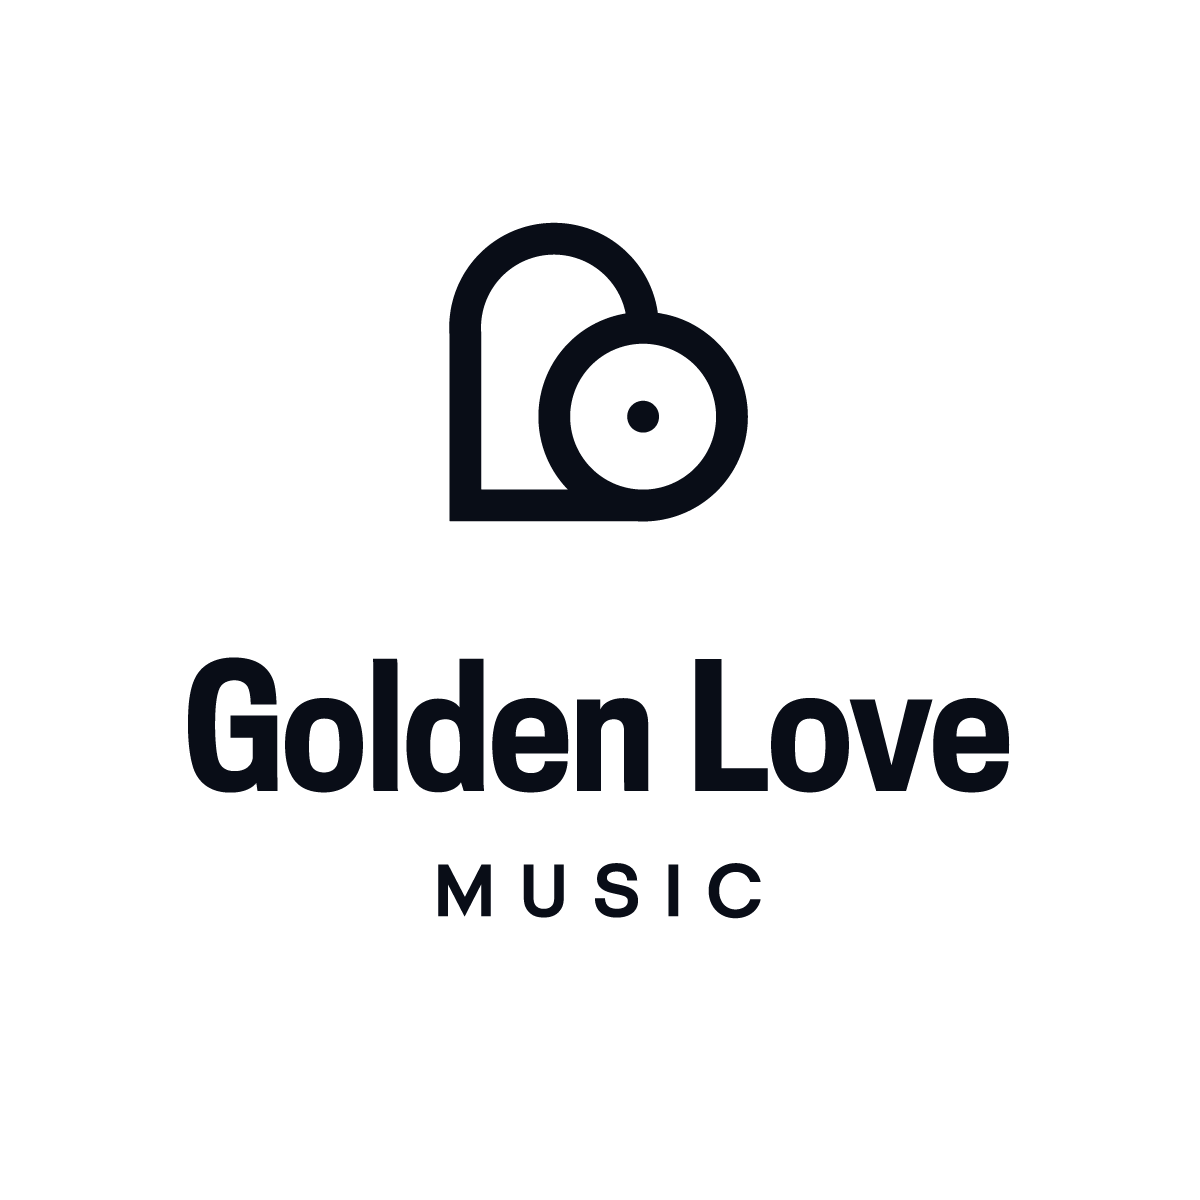 GOLDEN LOVE MUSIC